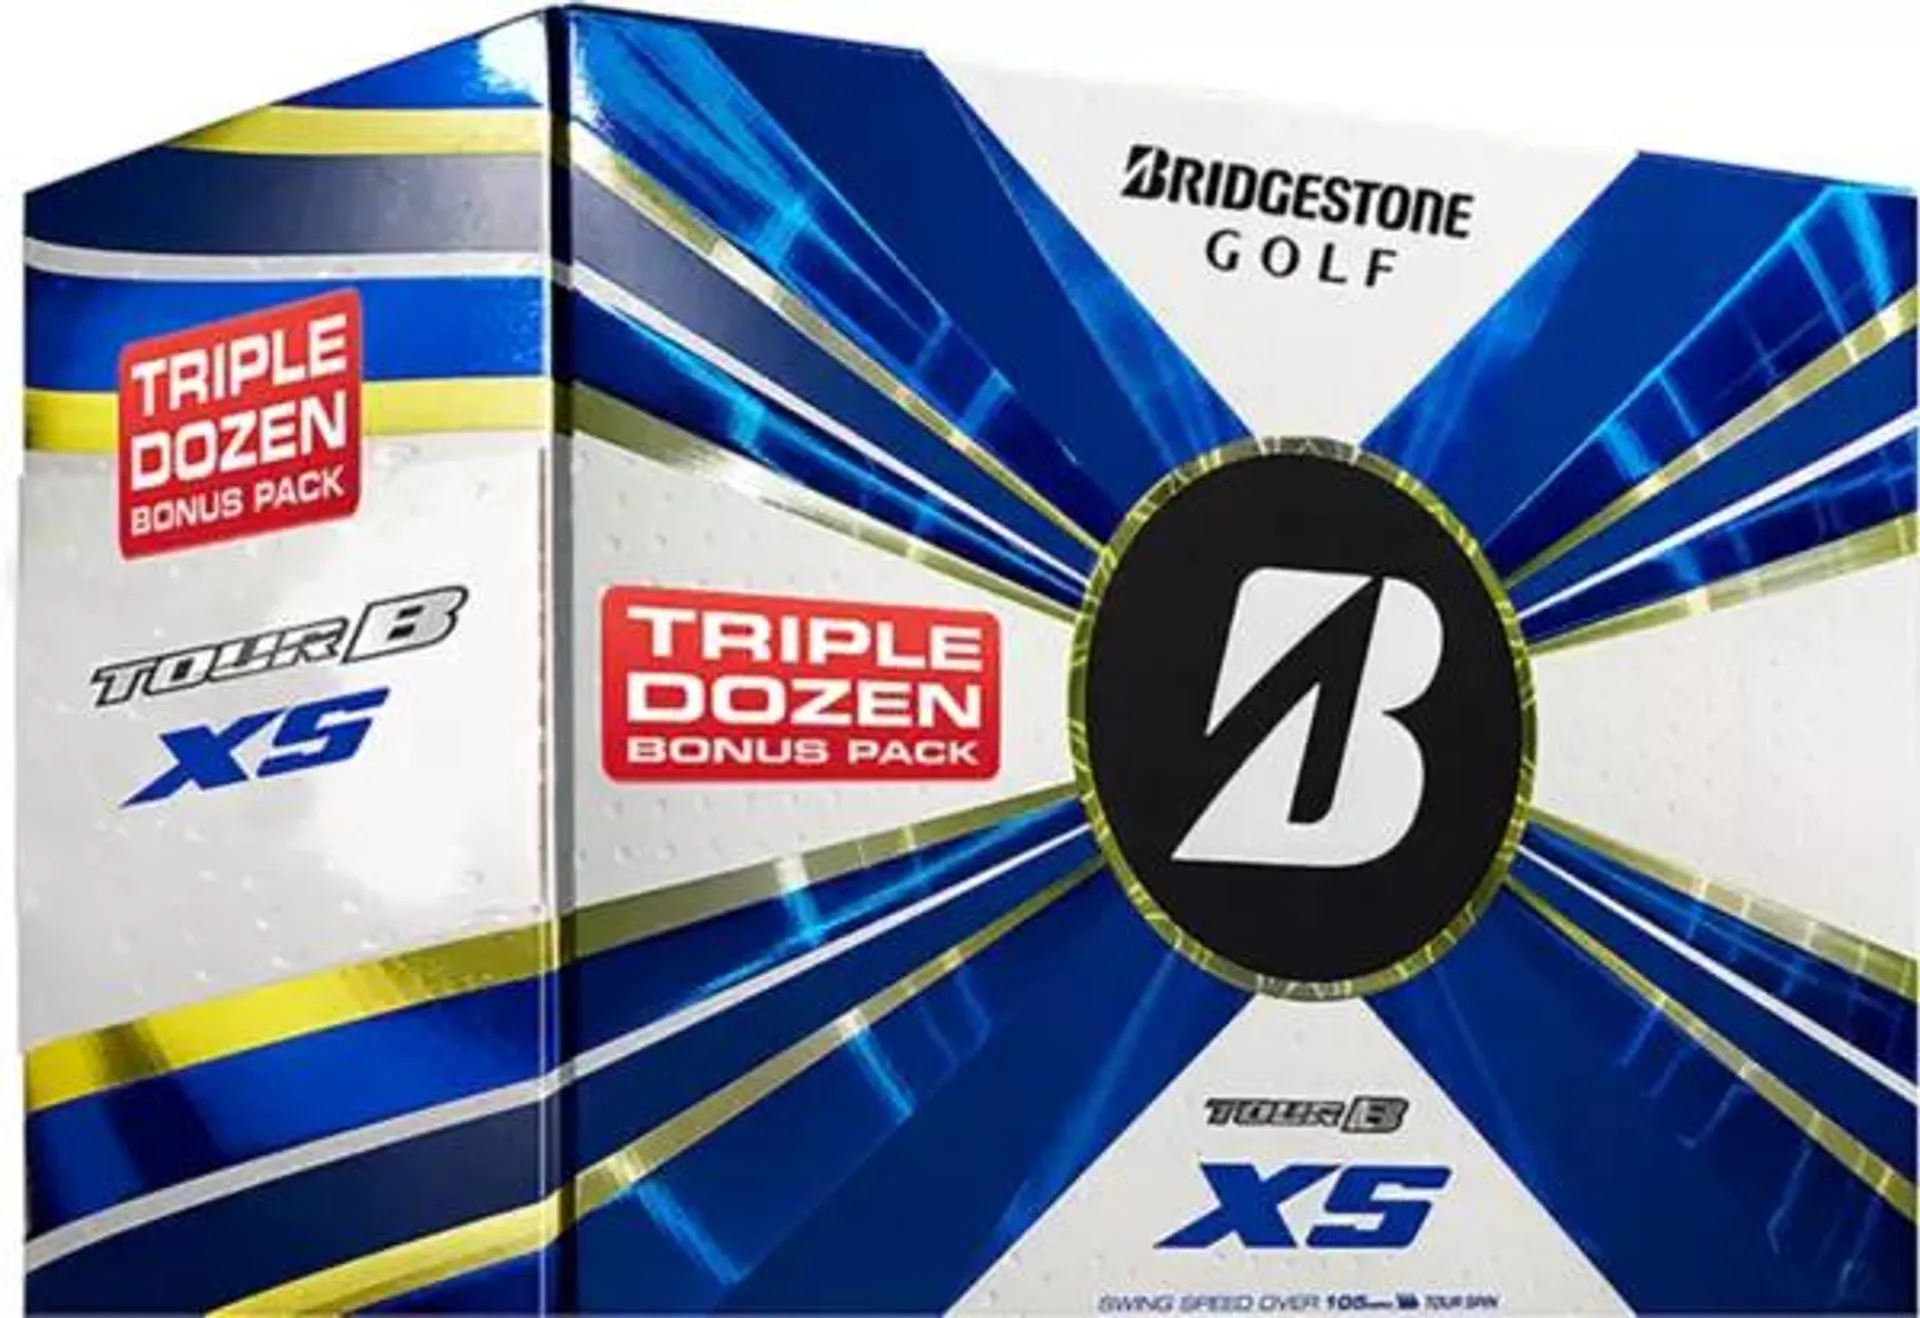 Bridgestone 2022 Tour B XS Golf Balls - 3 Dozen